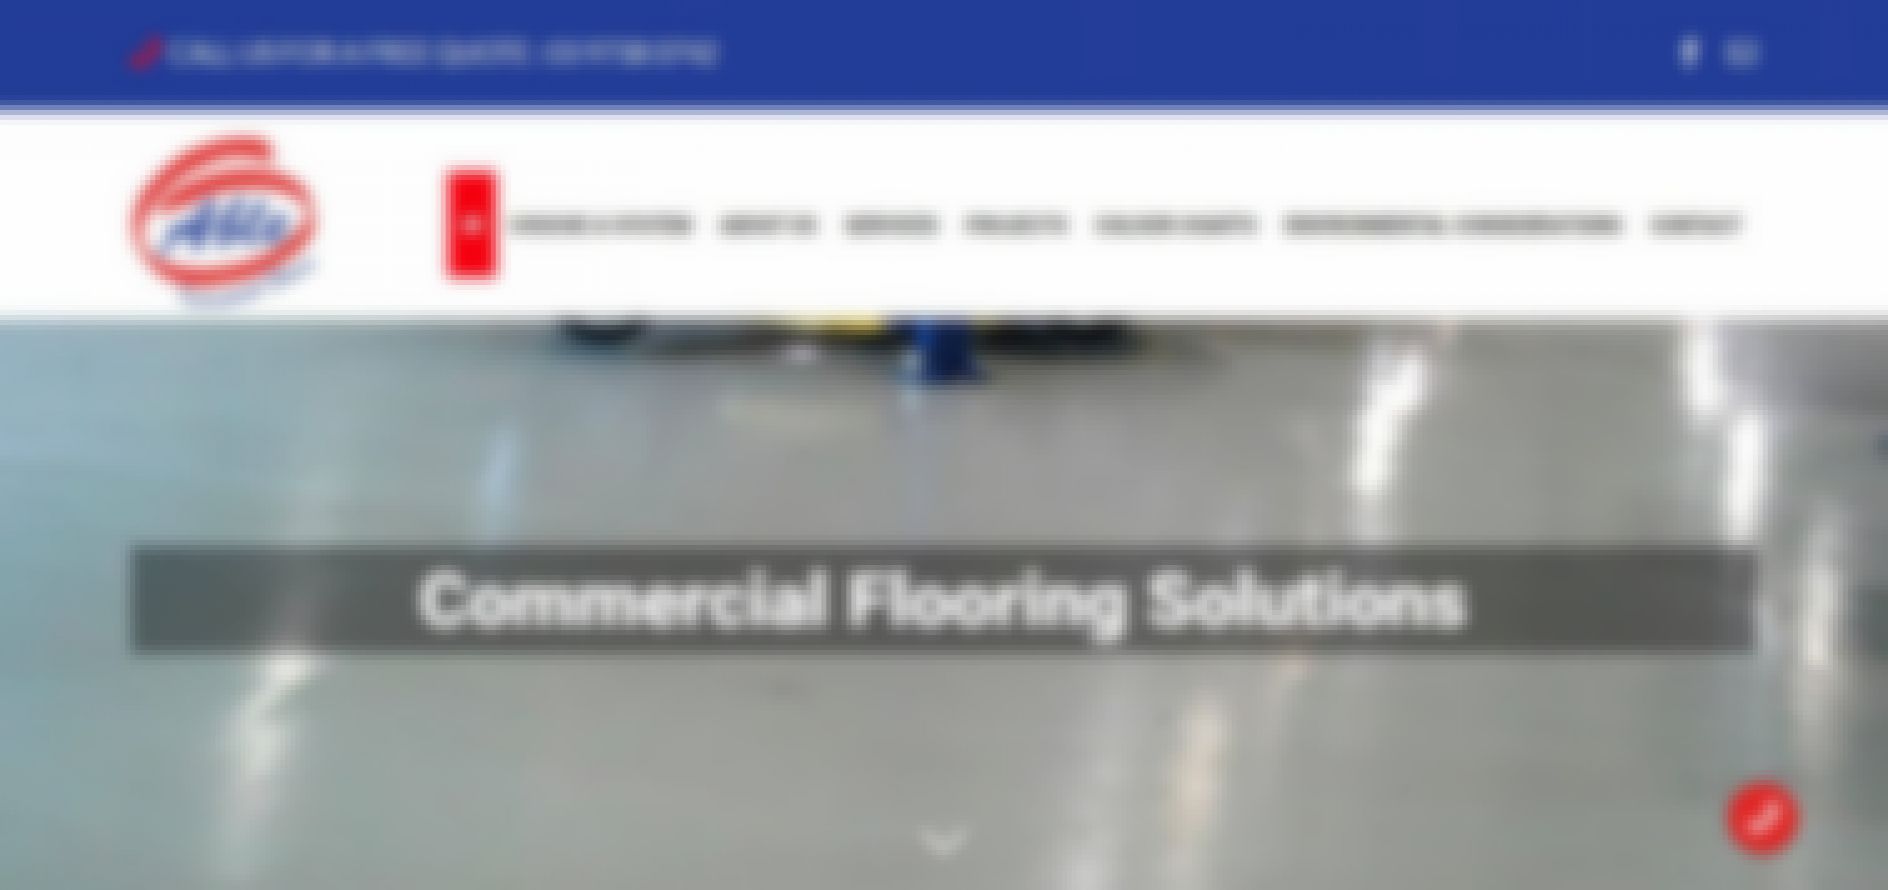 able floors epoxy flooring & coatings melbourne